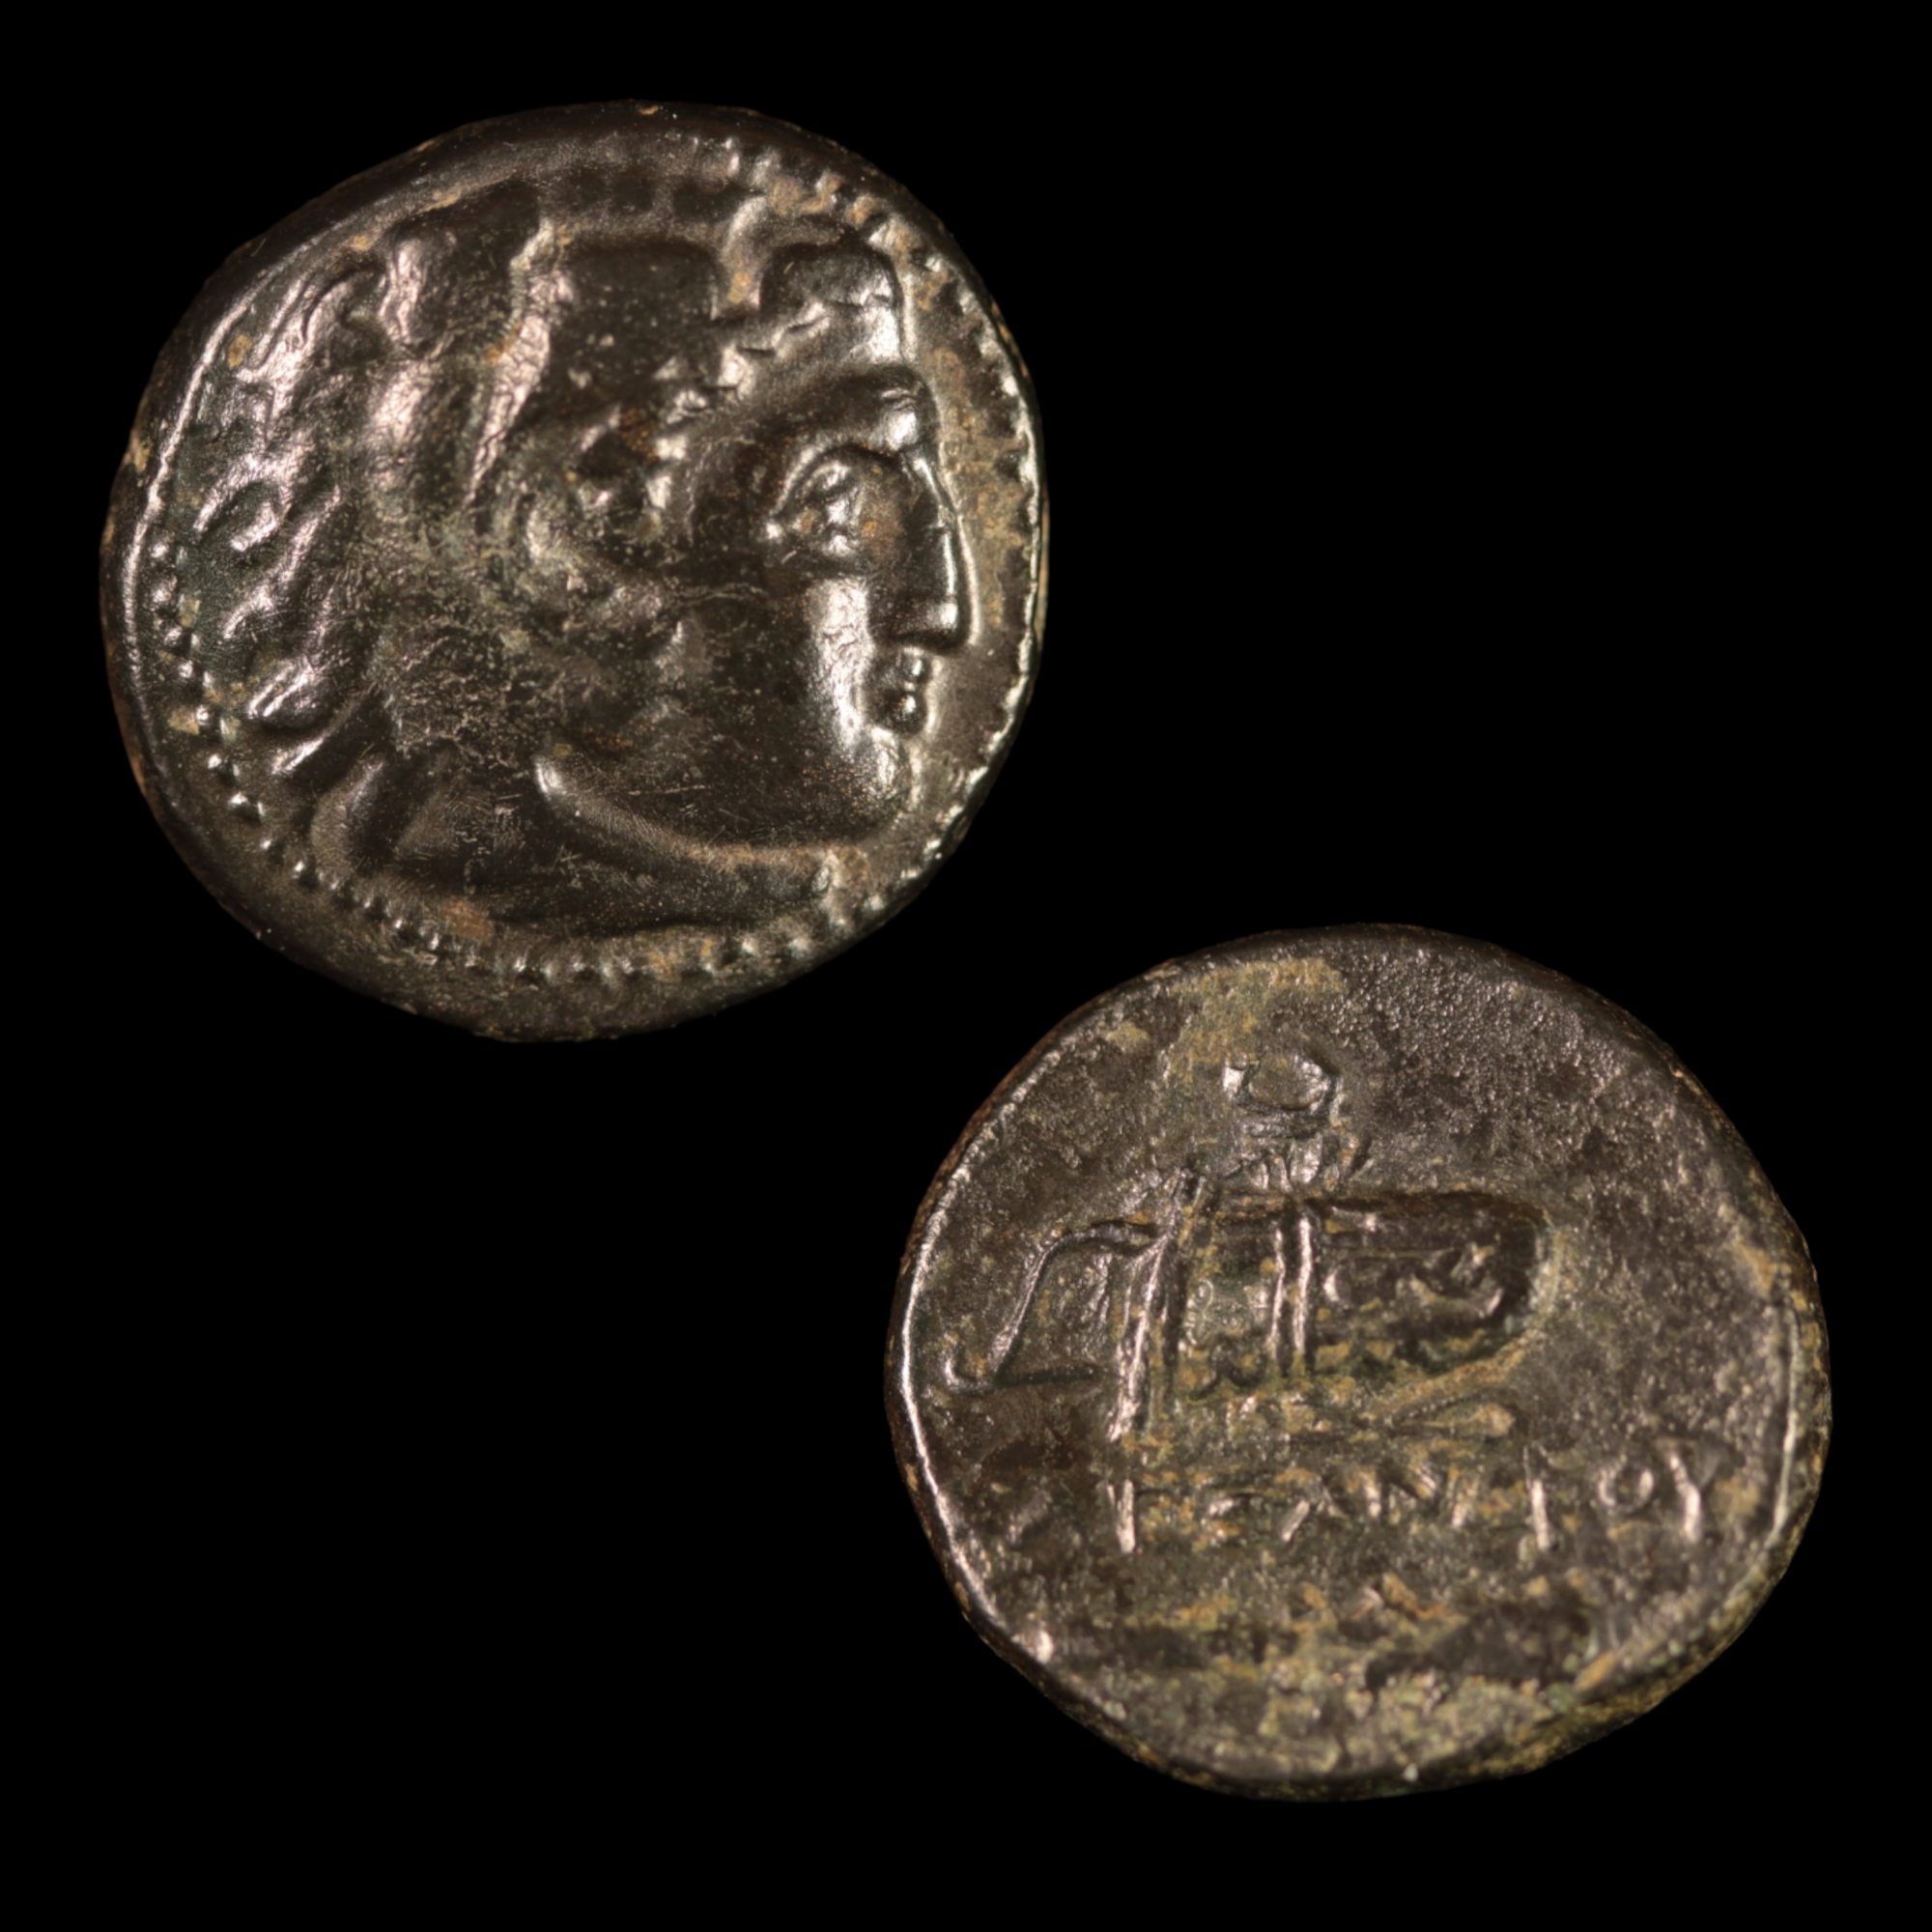 Alexander the Great Bronze Unit (#1) - 336 to 323 BCE - Macedonian Empire